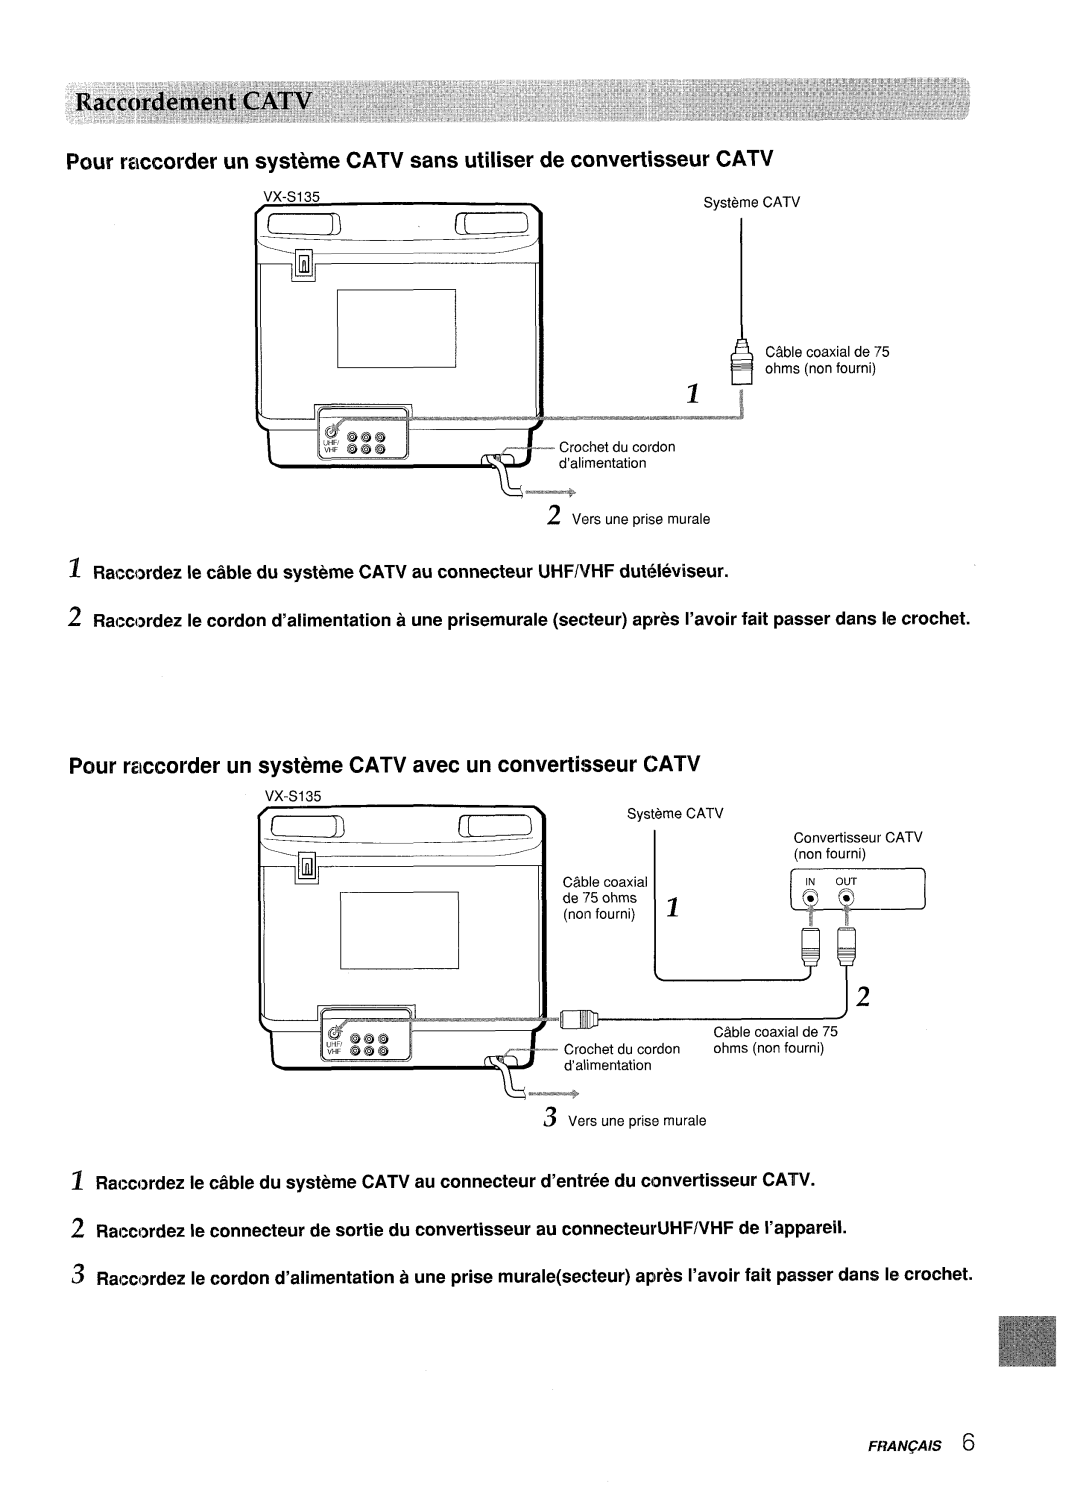 Aiwa VX-S205U, VX-S135U manual w---+, qiiiiJ, Q=&--+, Pour raccot’der un systeme CATV saris utiliser de convertisseur CATV 